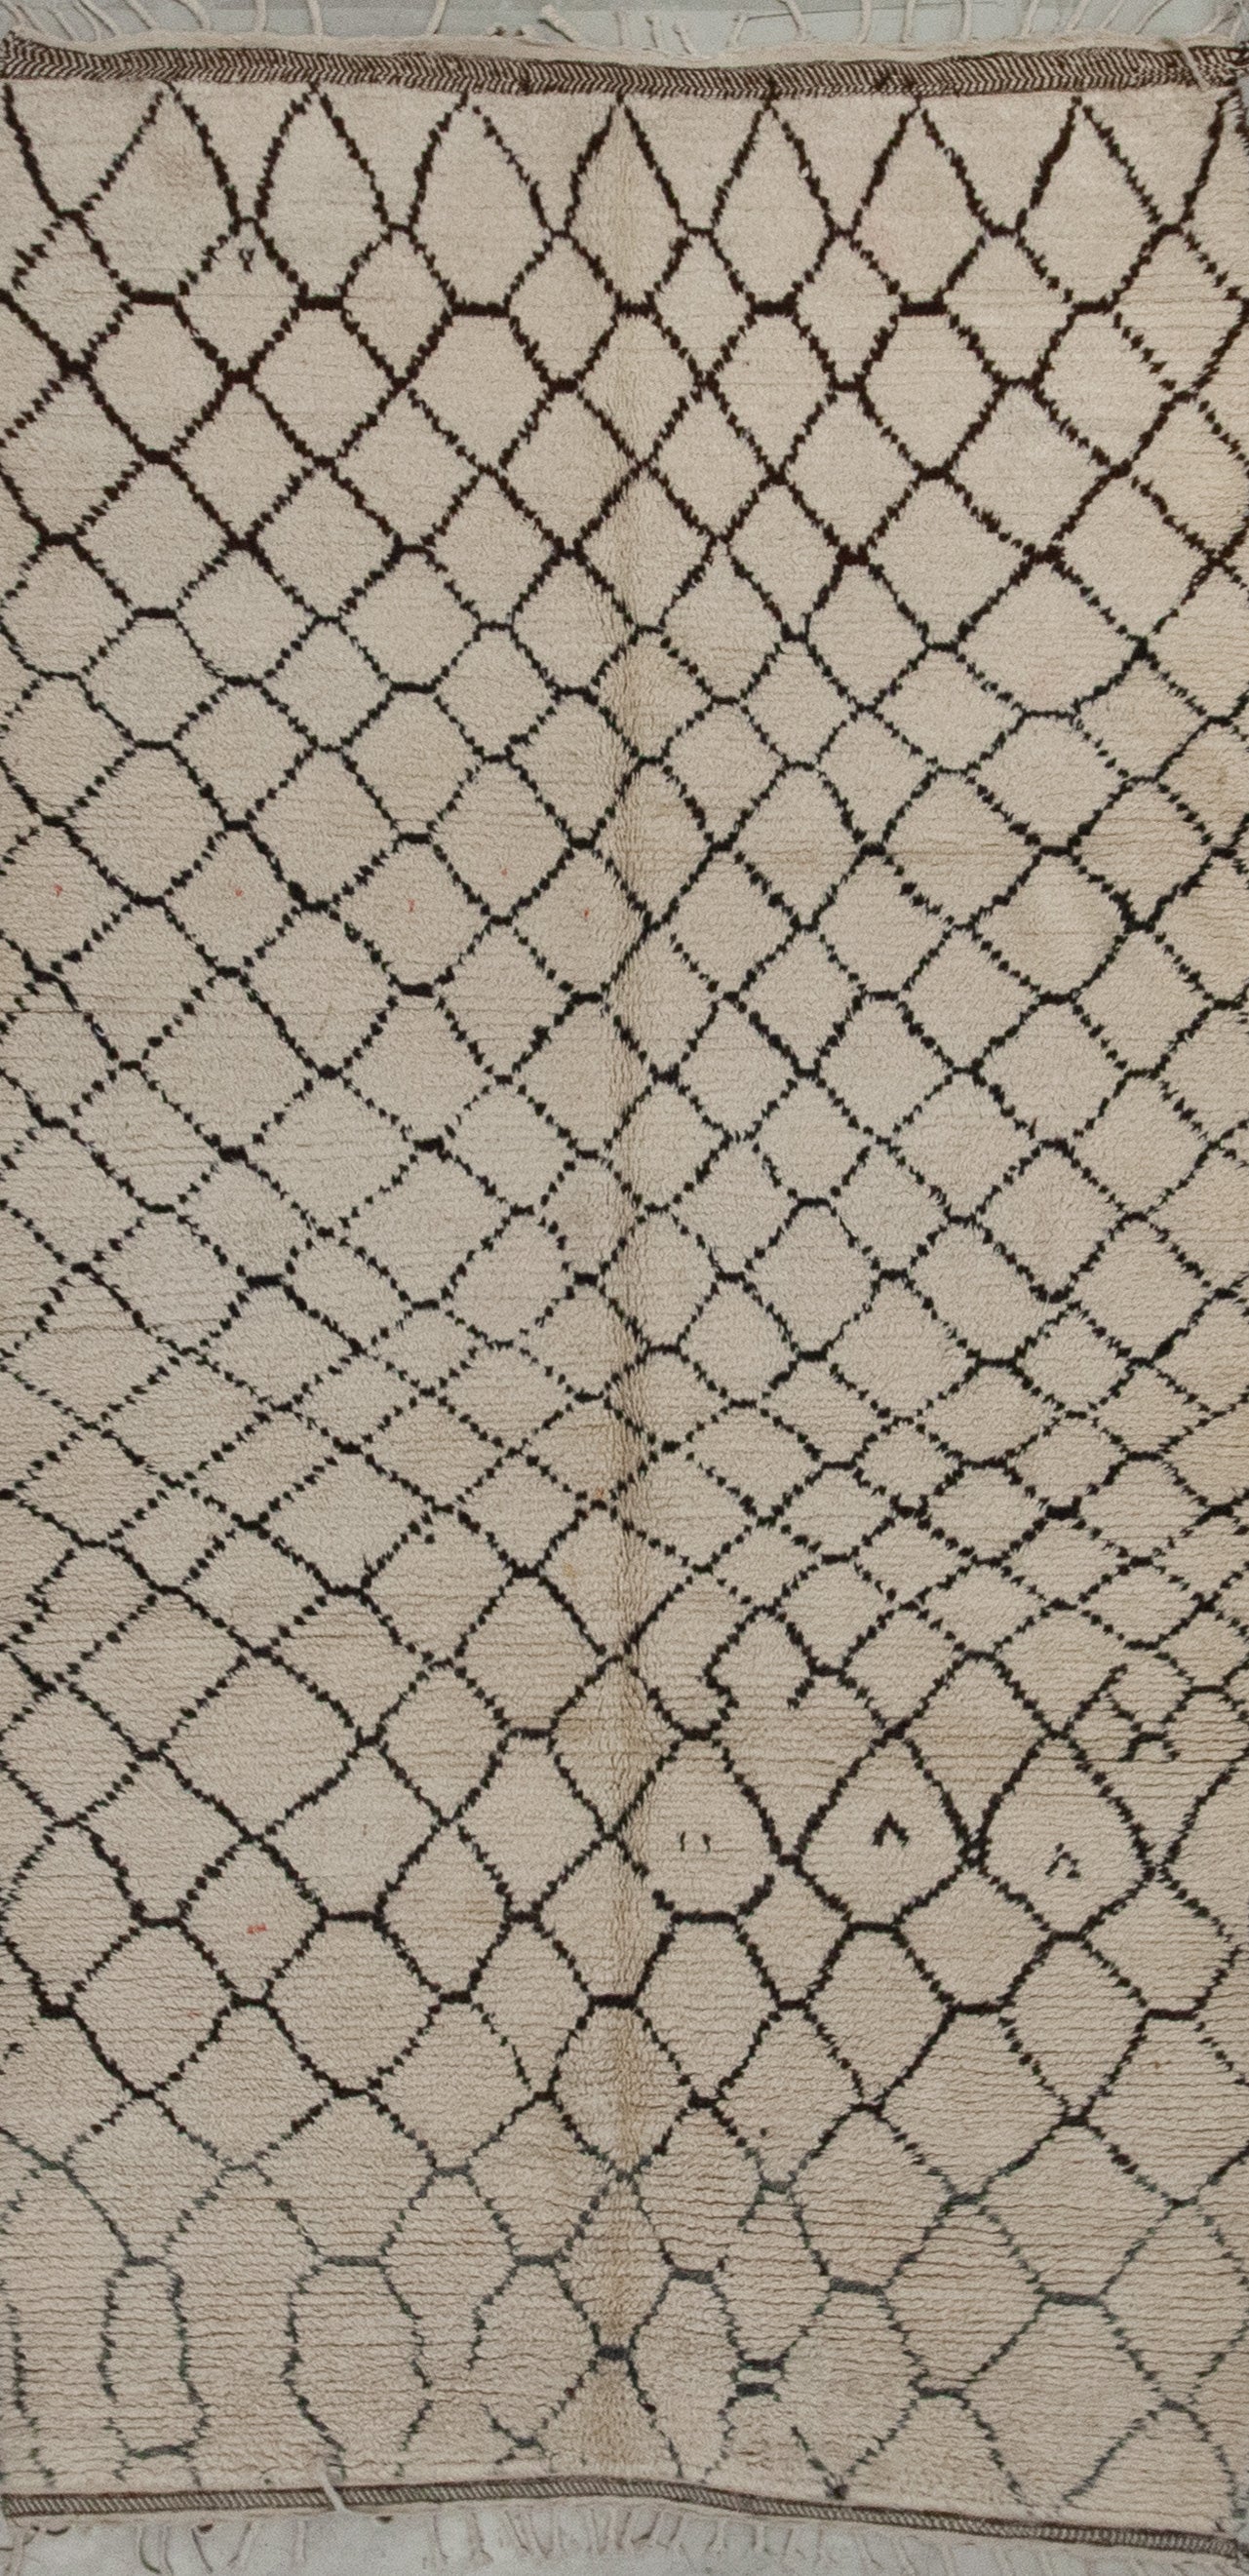 Beige vintage rug with a minimalistic diamond pattern.